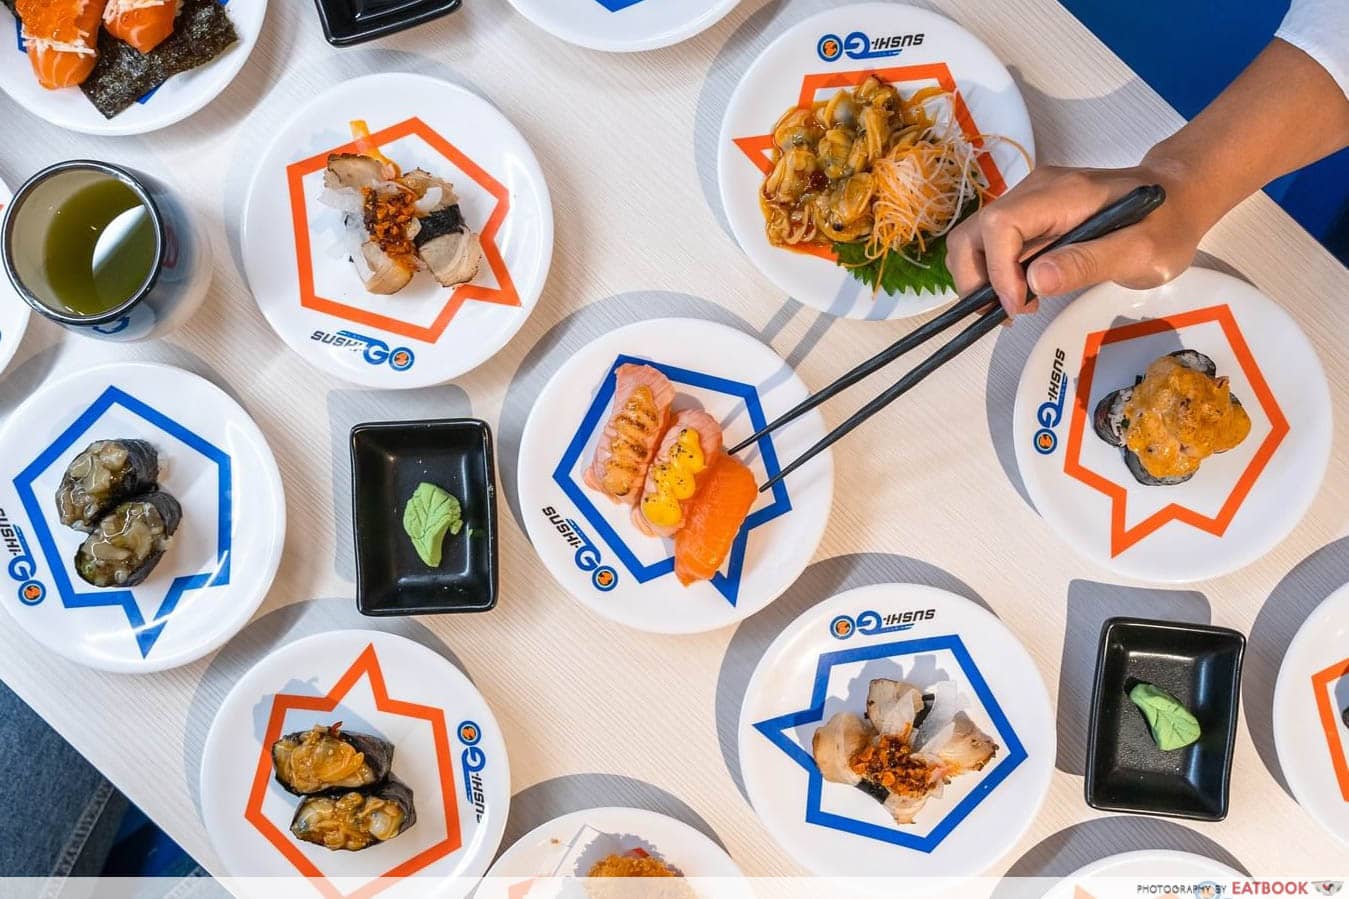 Sushi-GO, sushi and side dishes